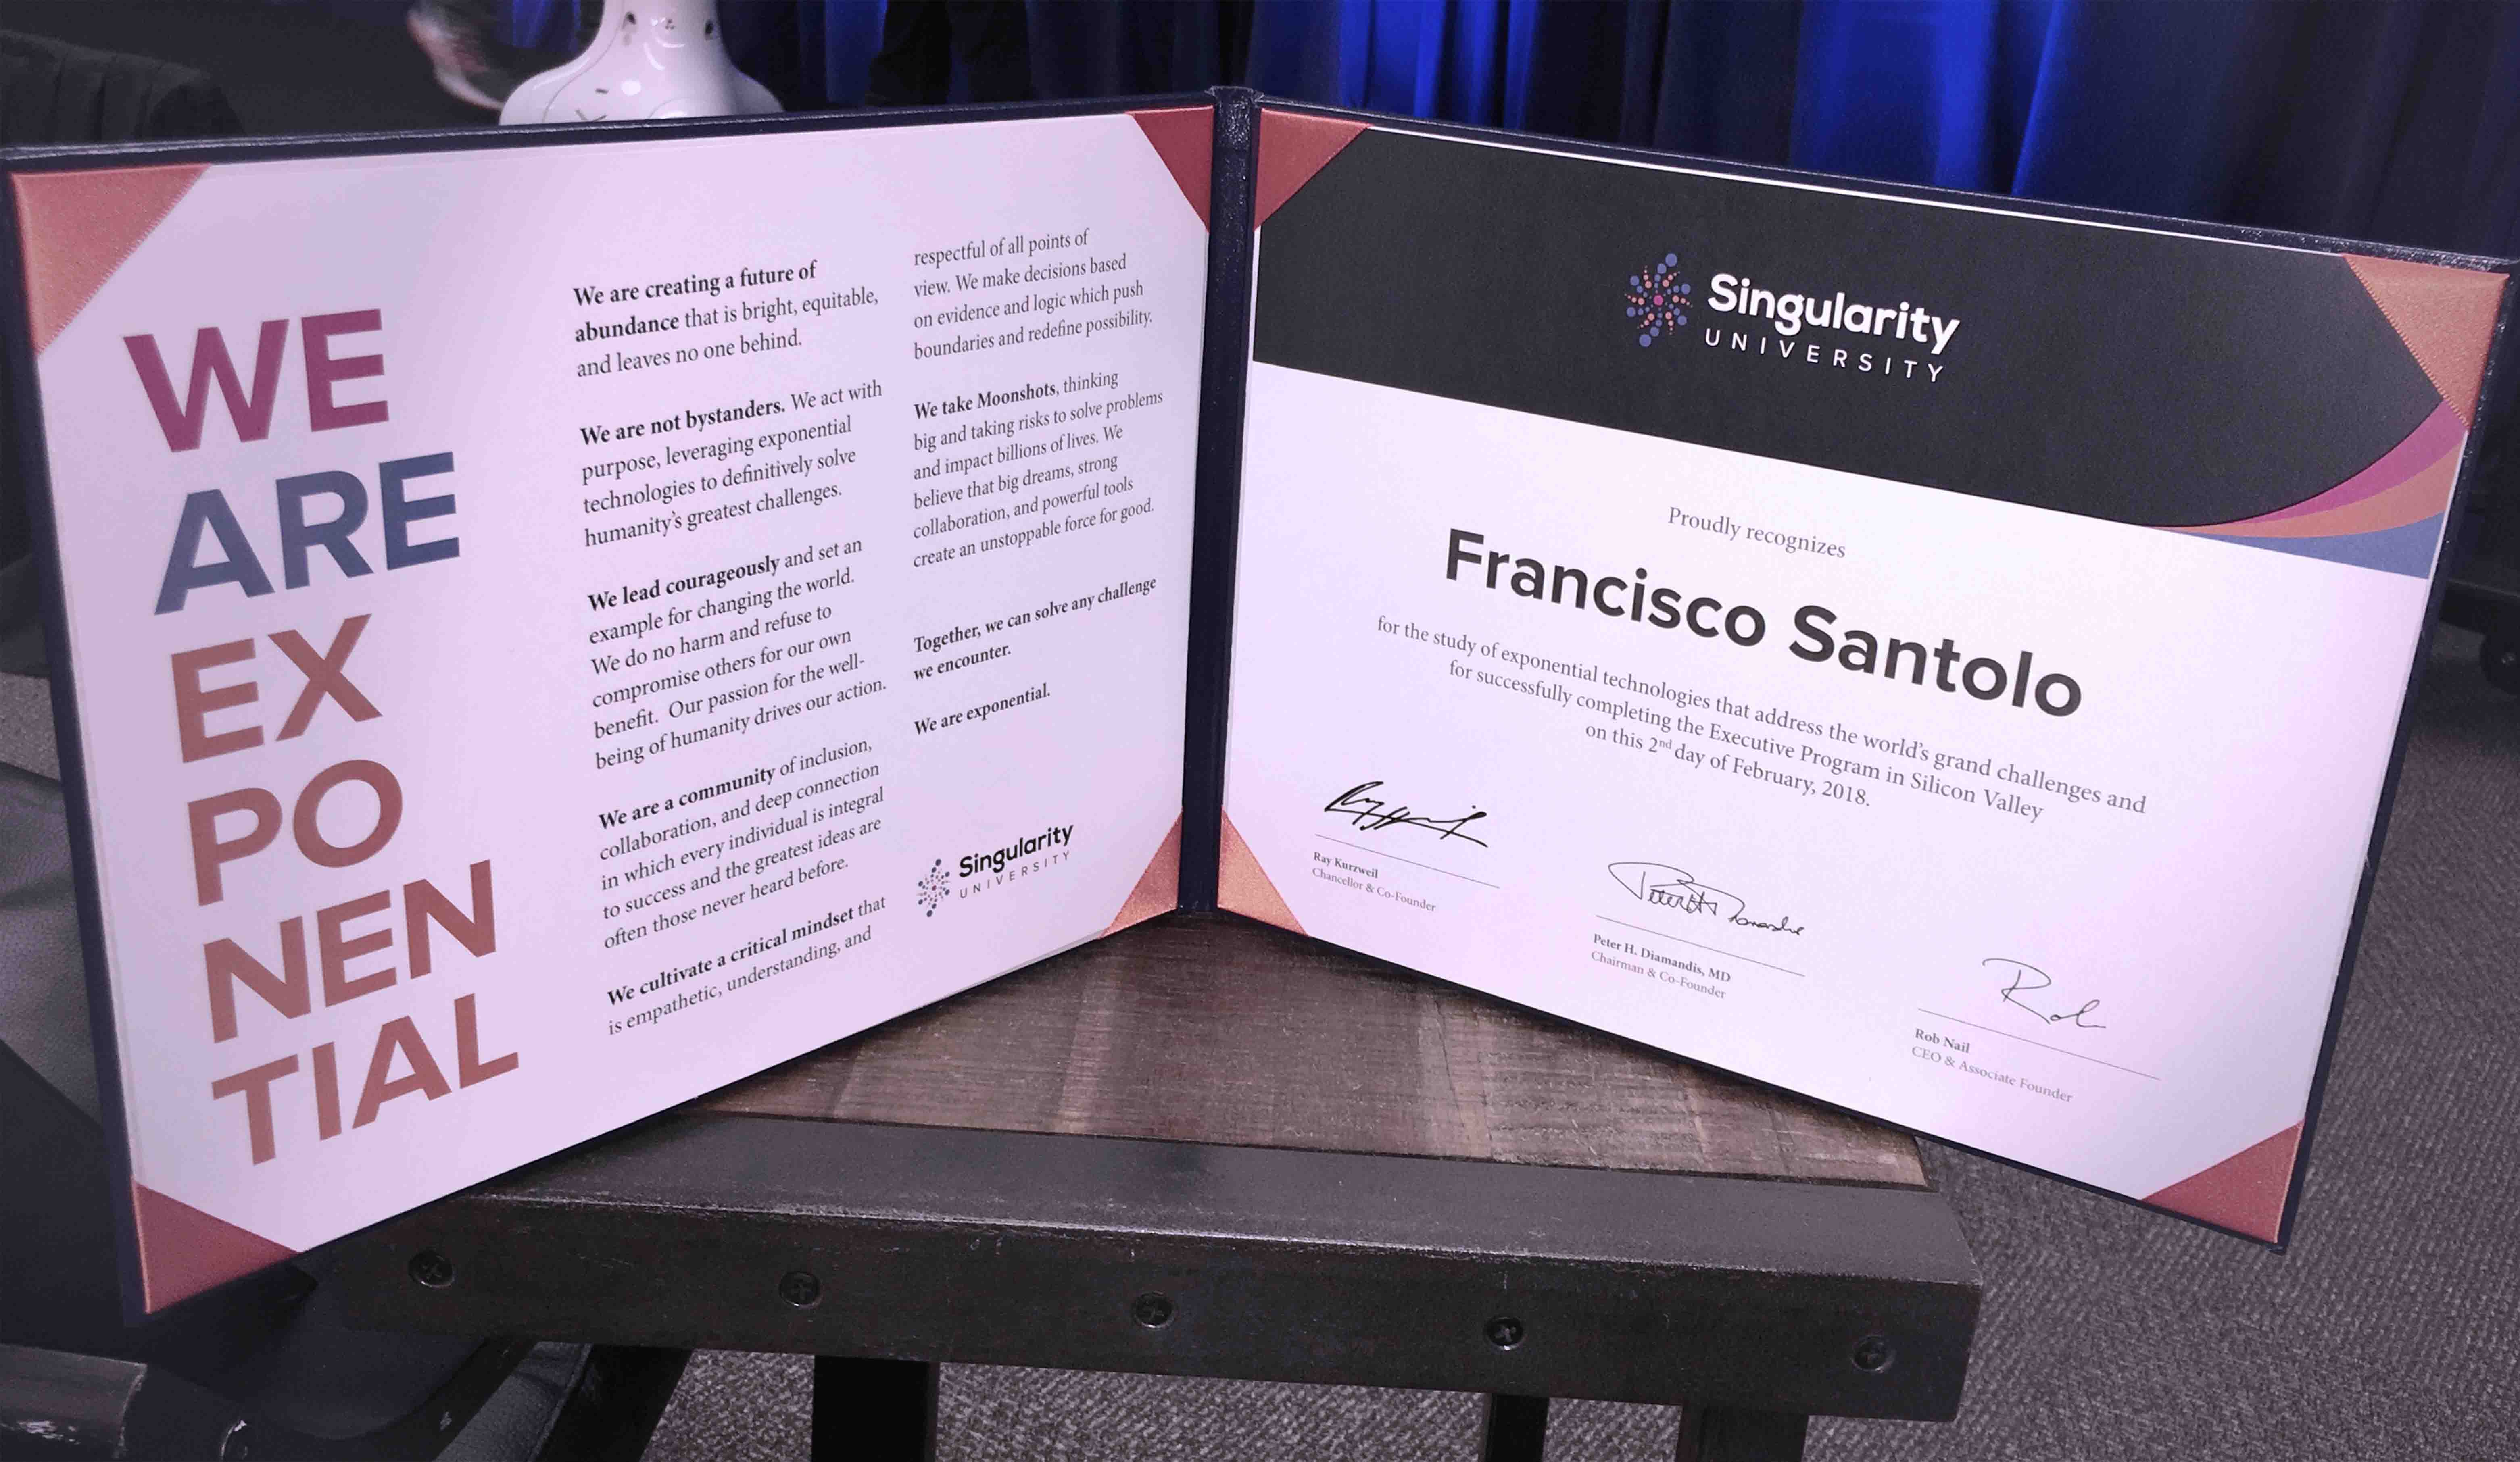 Francisco Santolo was selected by Singularity University